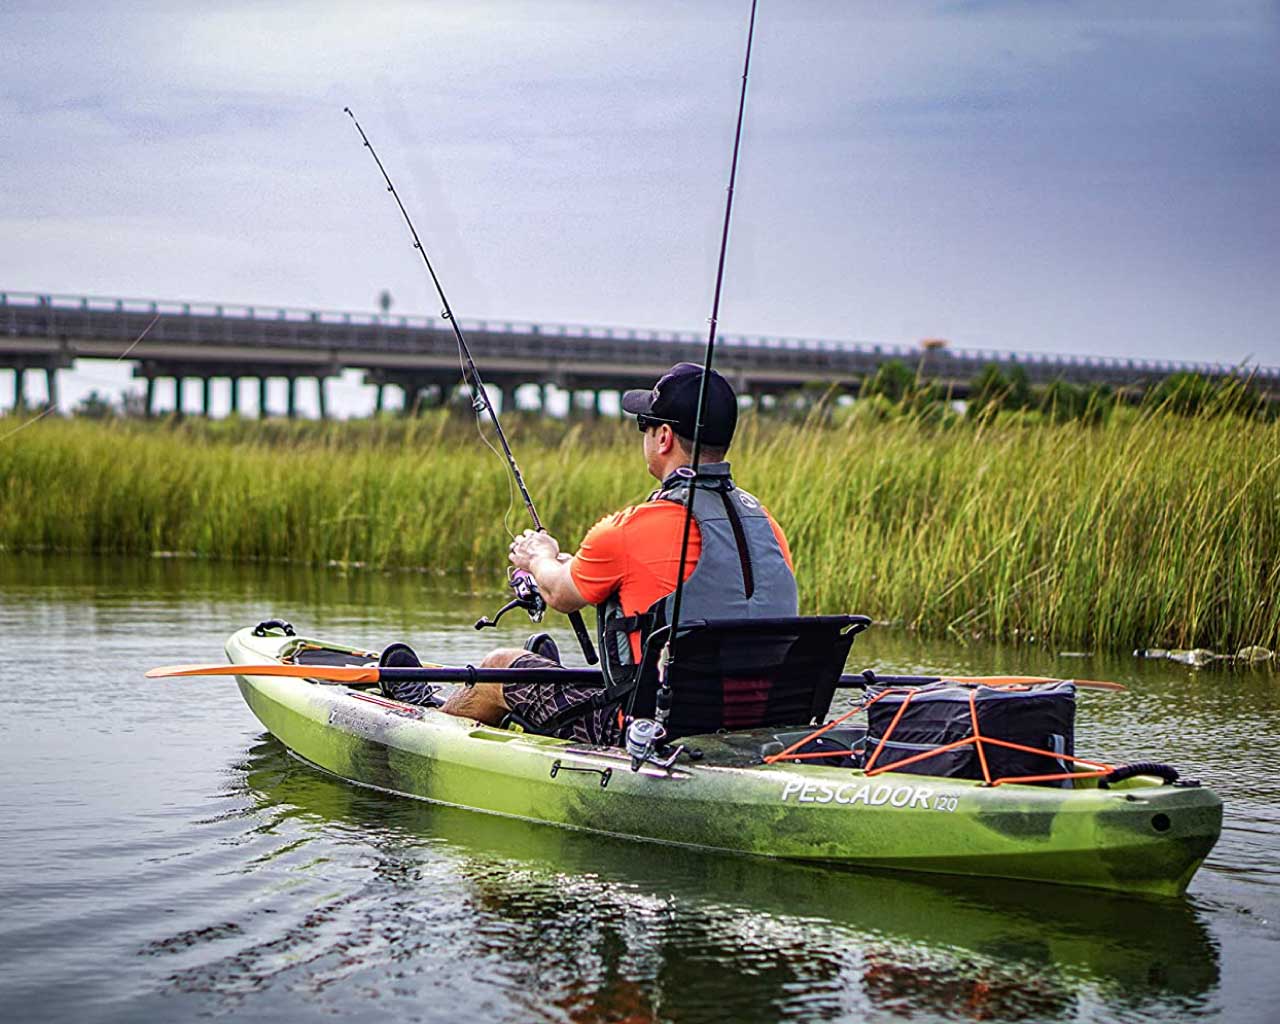 A fisherman fishing from a fishing kayak